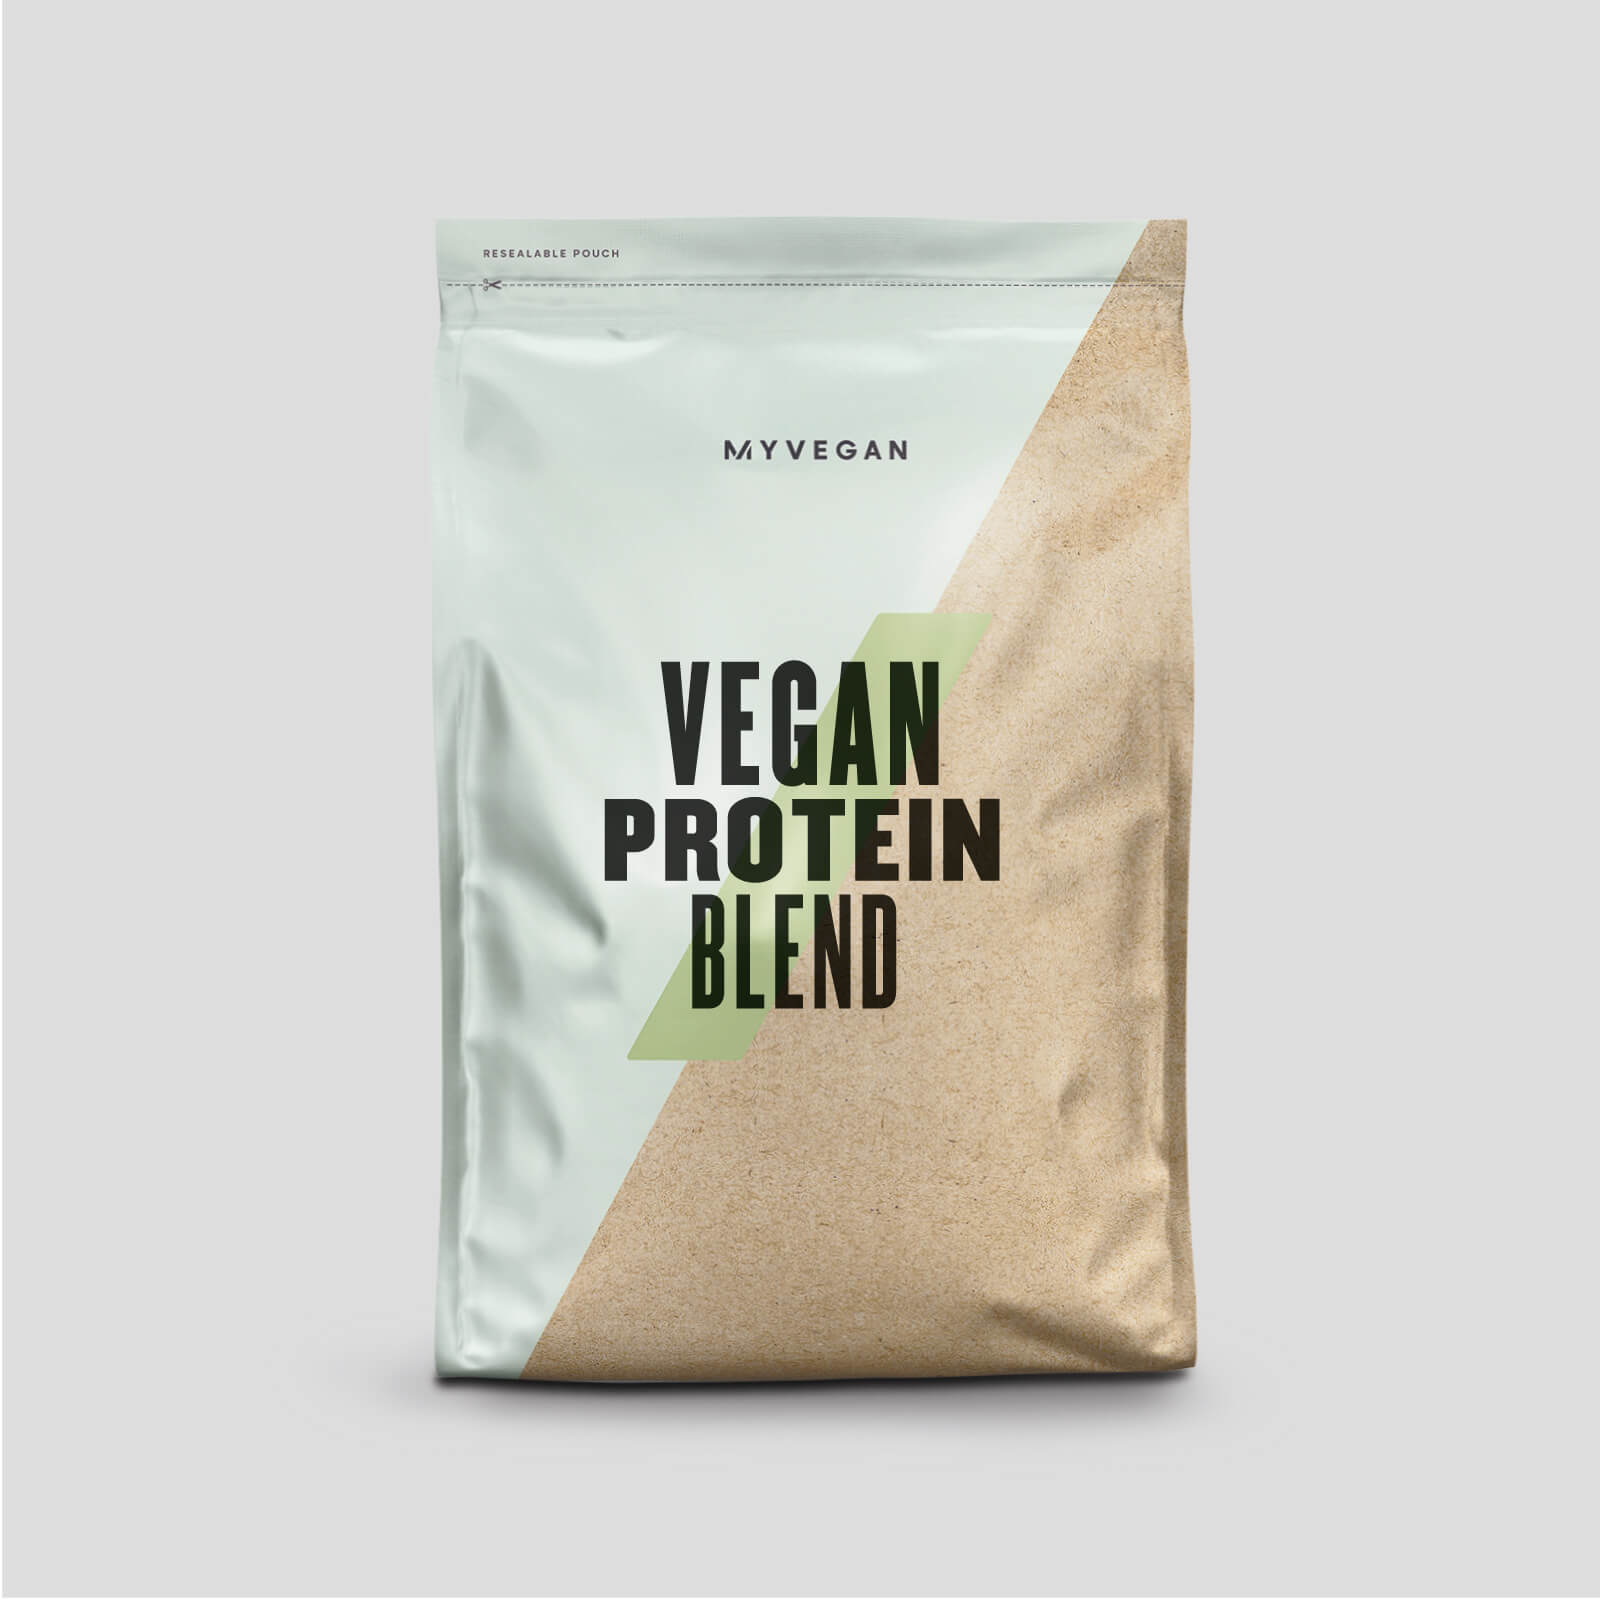 Myvegan Vegan Protein Blend - 500g - Blueberry and Cinnamon